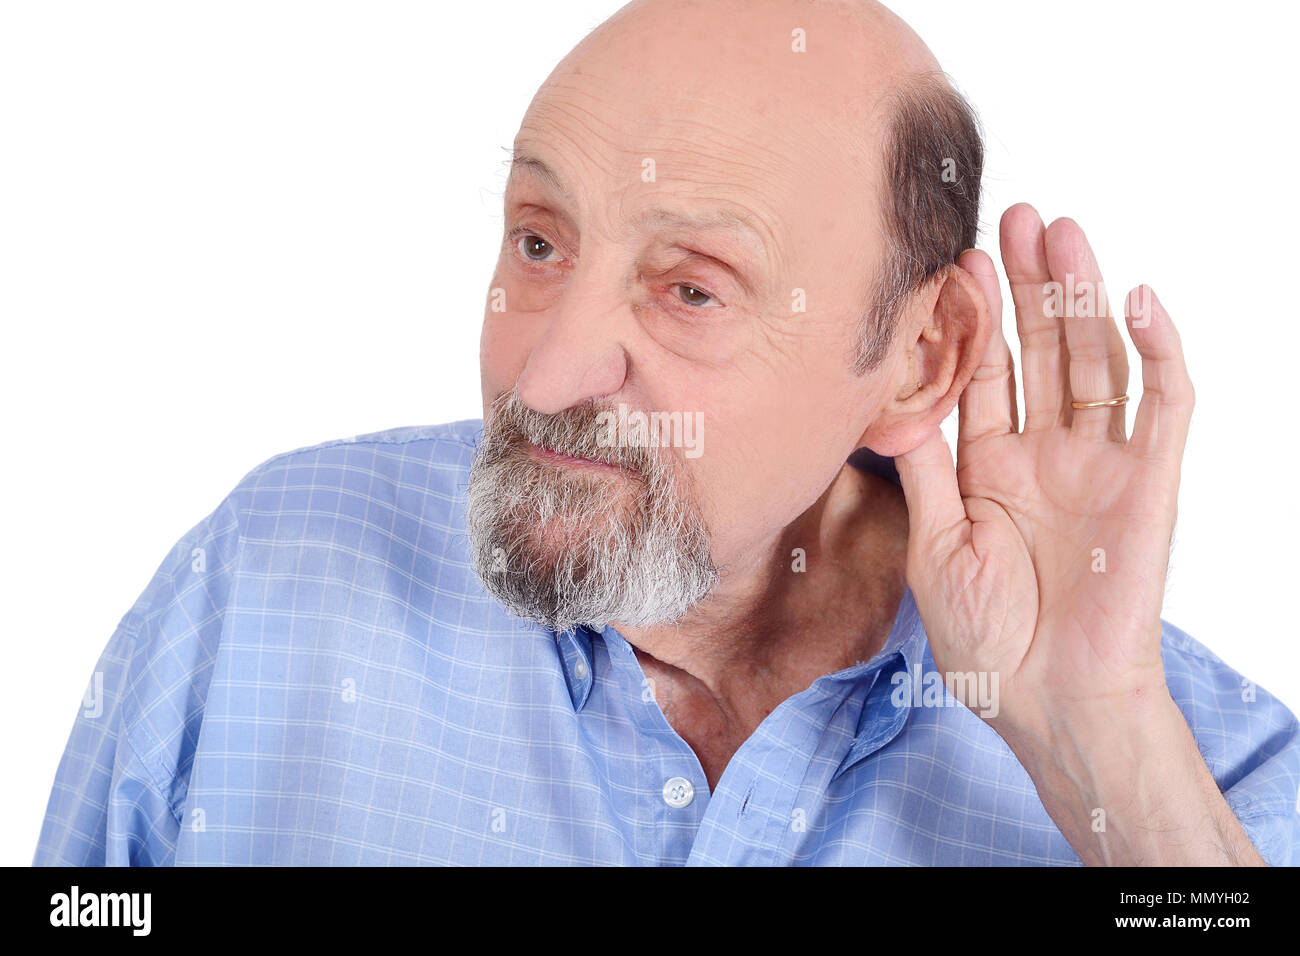 Retrato de sordos viejo hombre tratando de escuchar. Aislado en un fondo blanco. Foto de stock